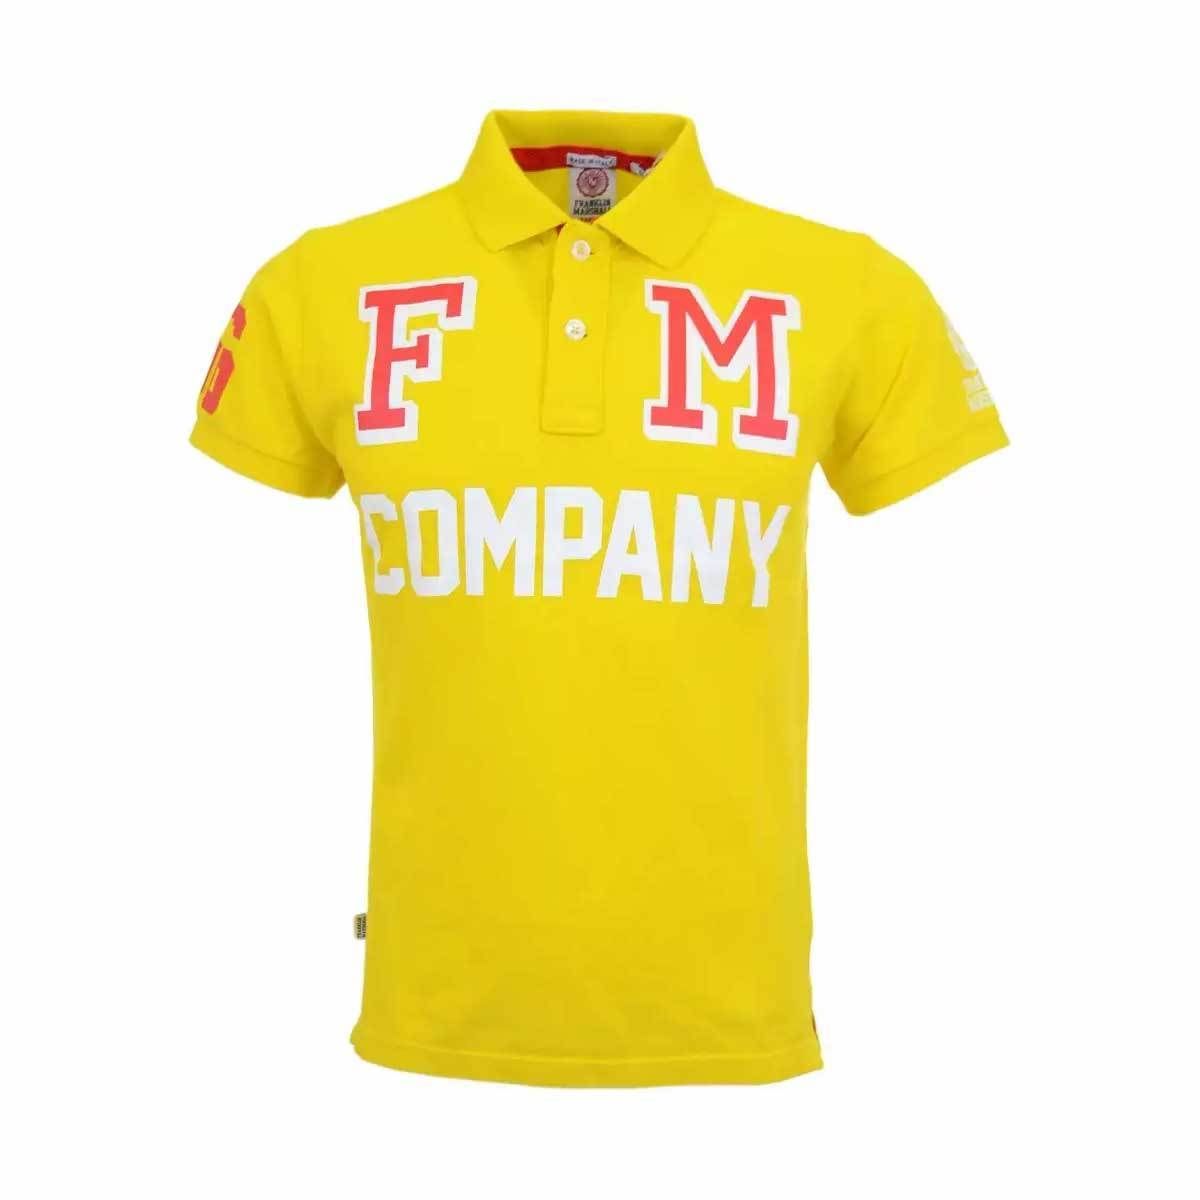 Franklin Marshall FM Company Mens Polo Shirt - Large